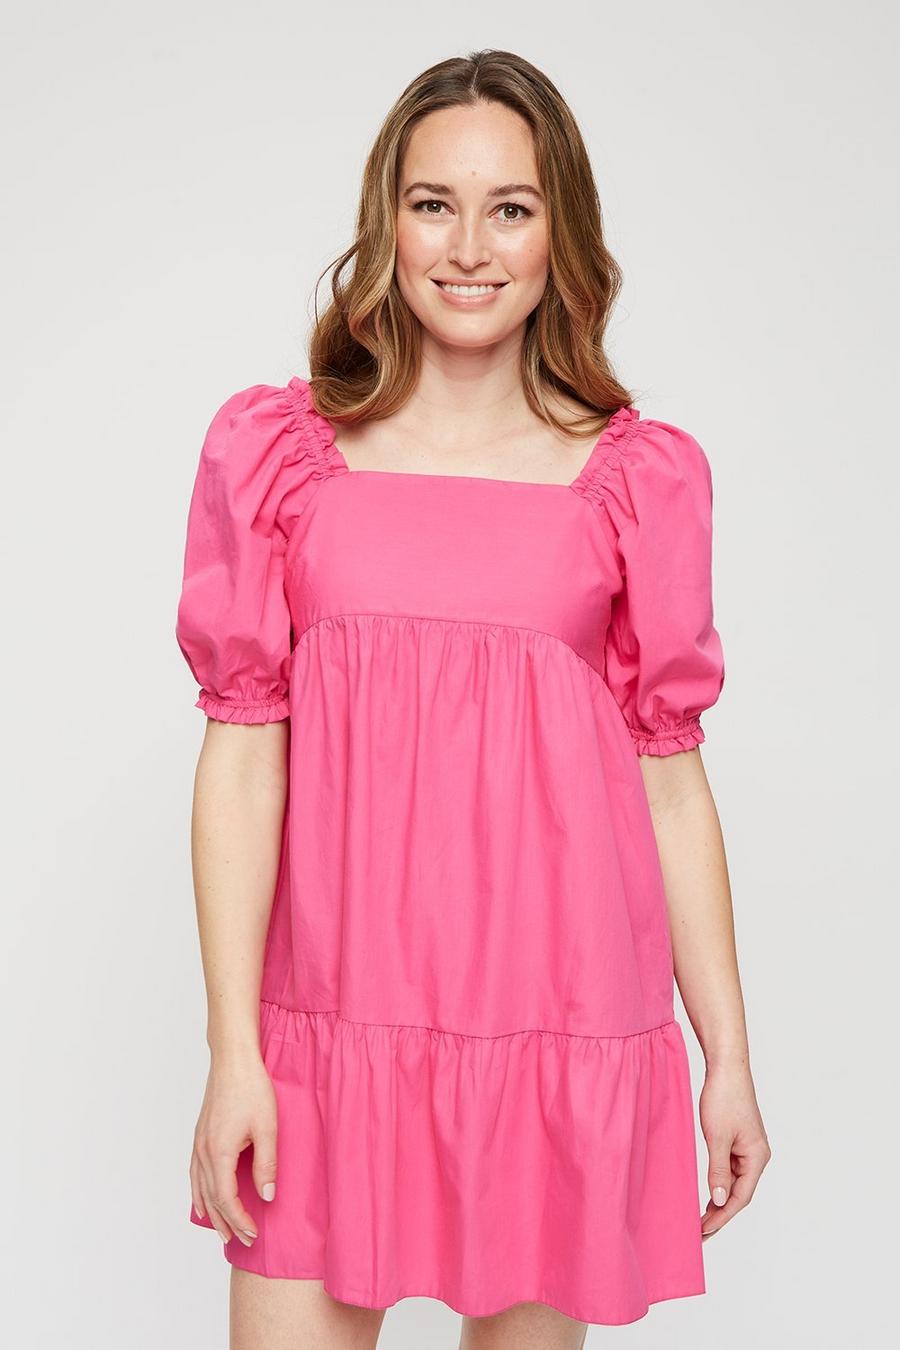 Bright Pink Smock Dress